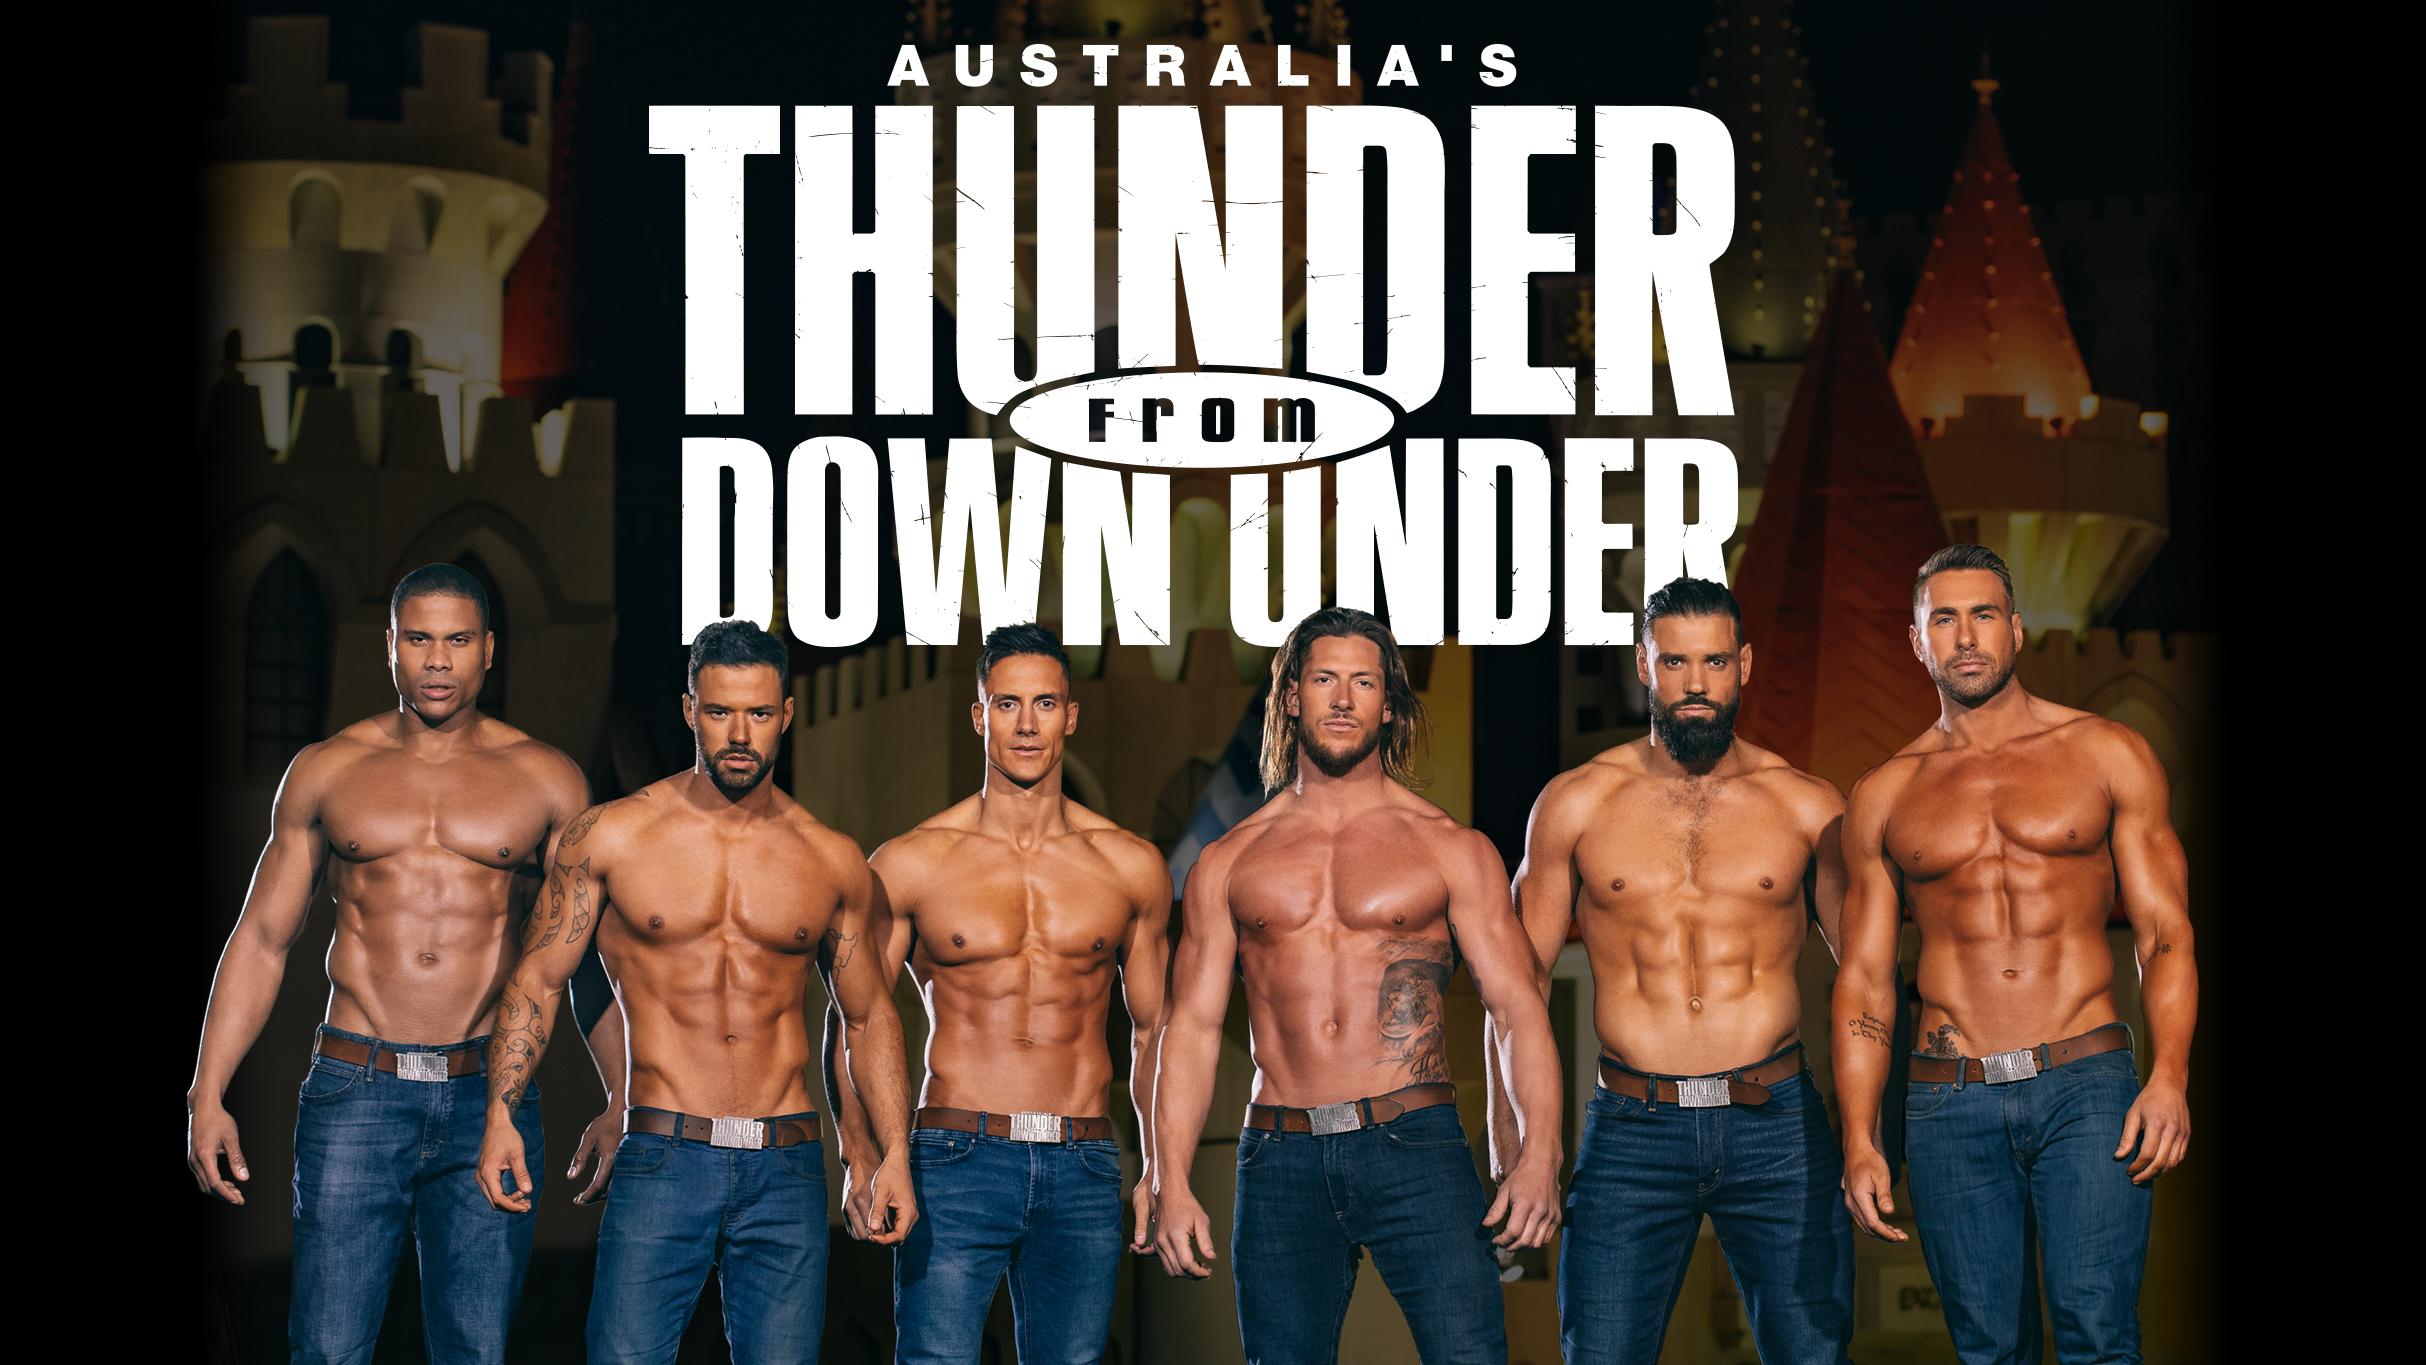 Australia's Thunder From Down Under - 18+ Event